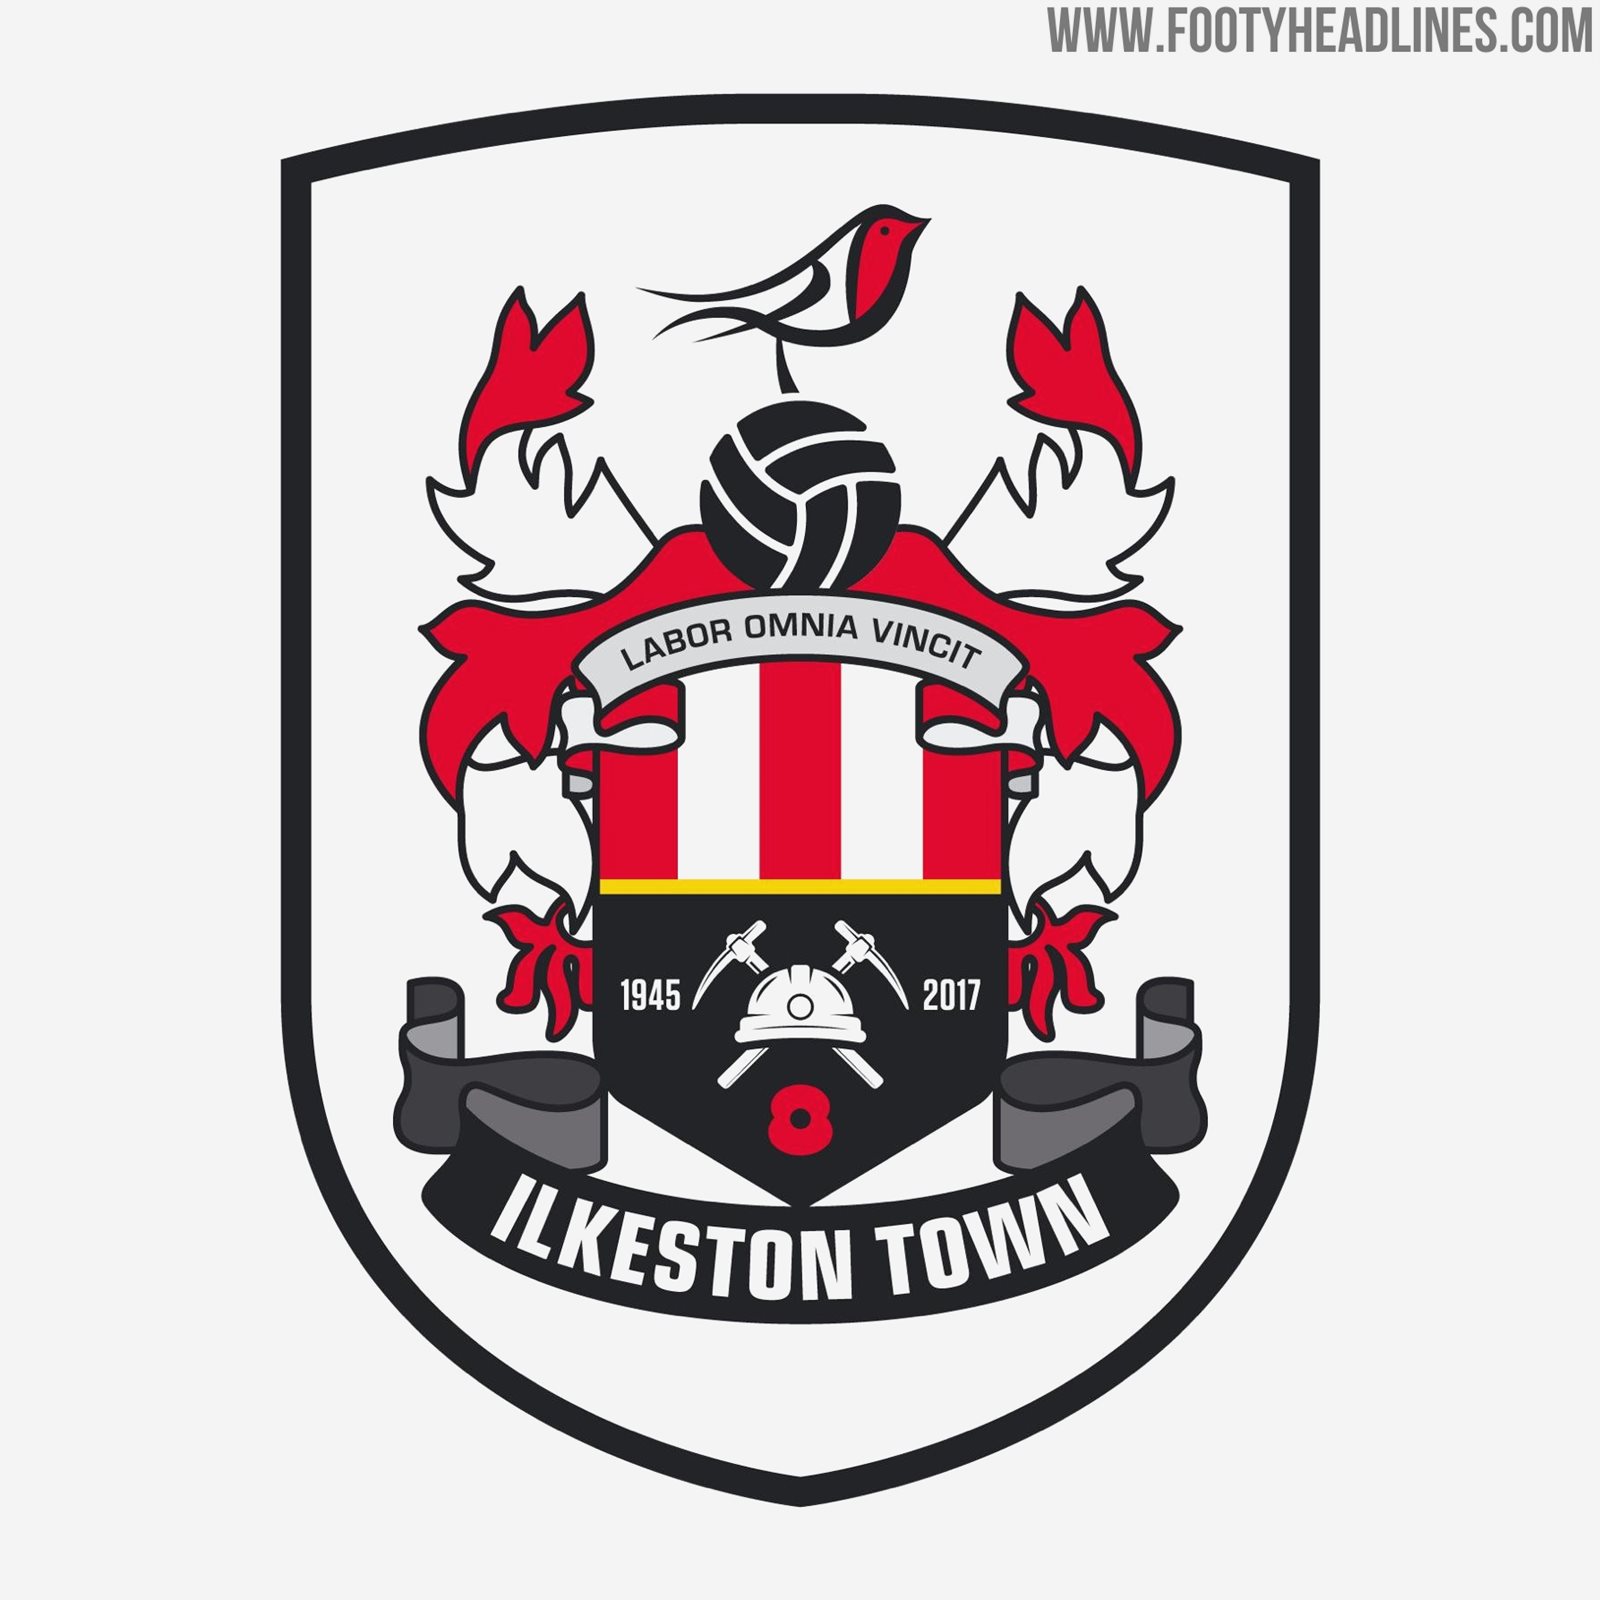 INSANE: Ilkeston Town FC Steals Huddersfield Town Logo For New Club Crest -  Footy Headlines